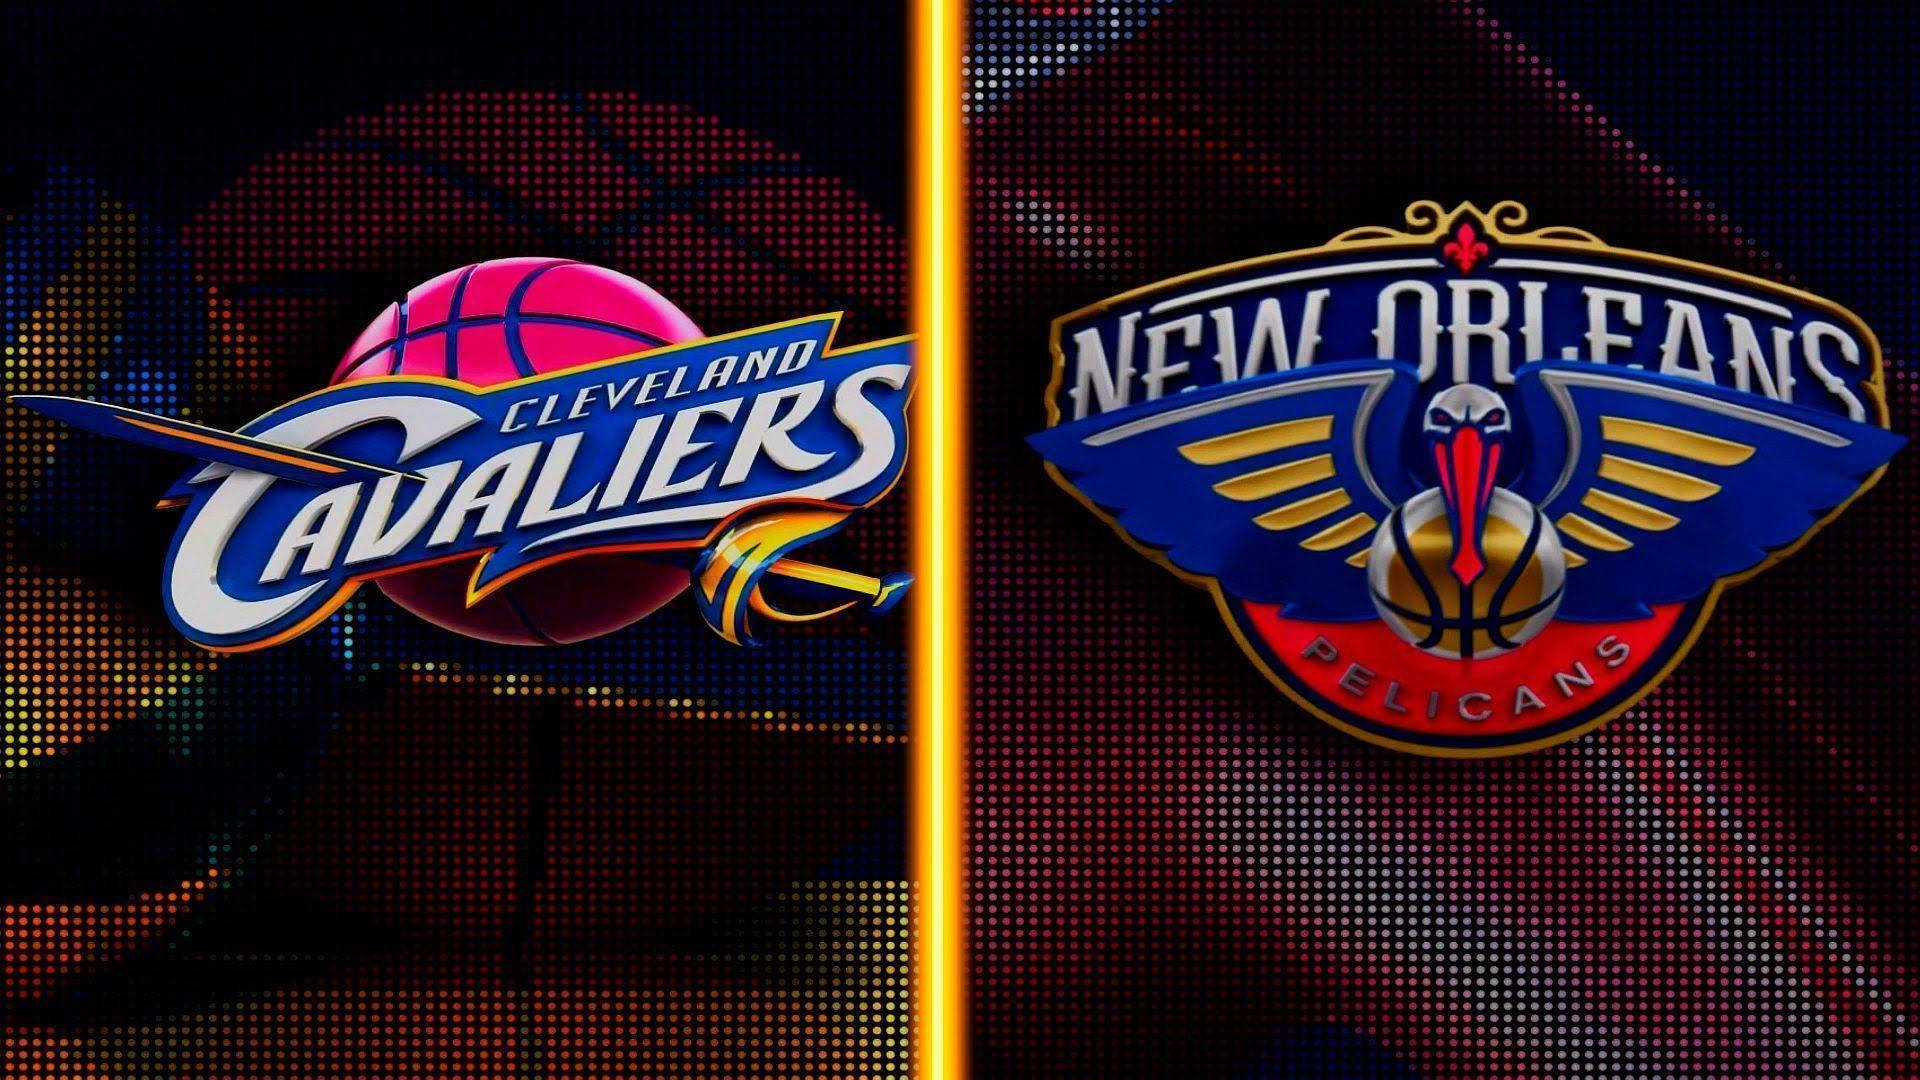 New Orleans Pelicans Vs Cavaliers Wallpaper